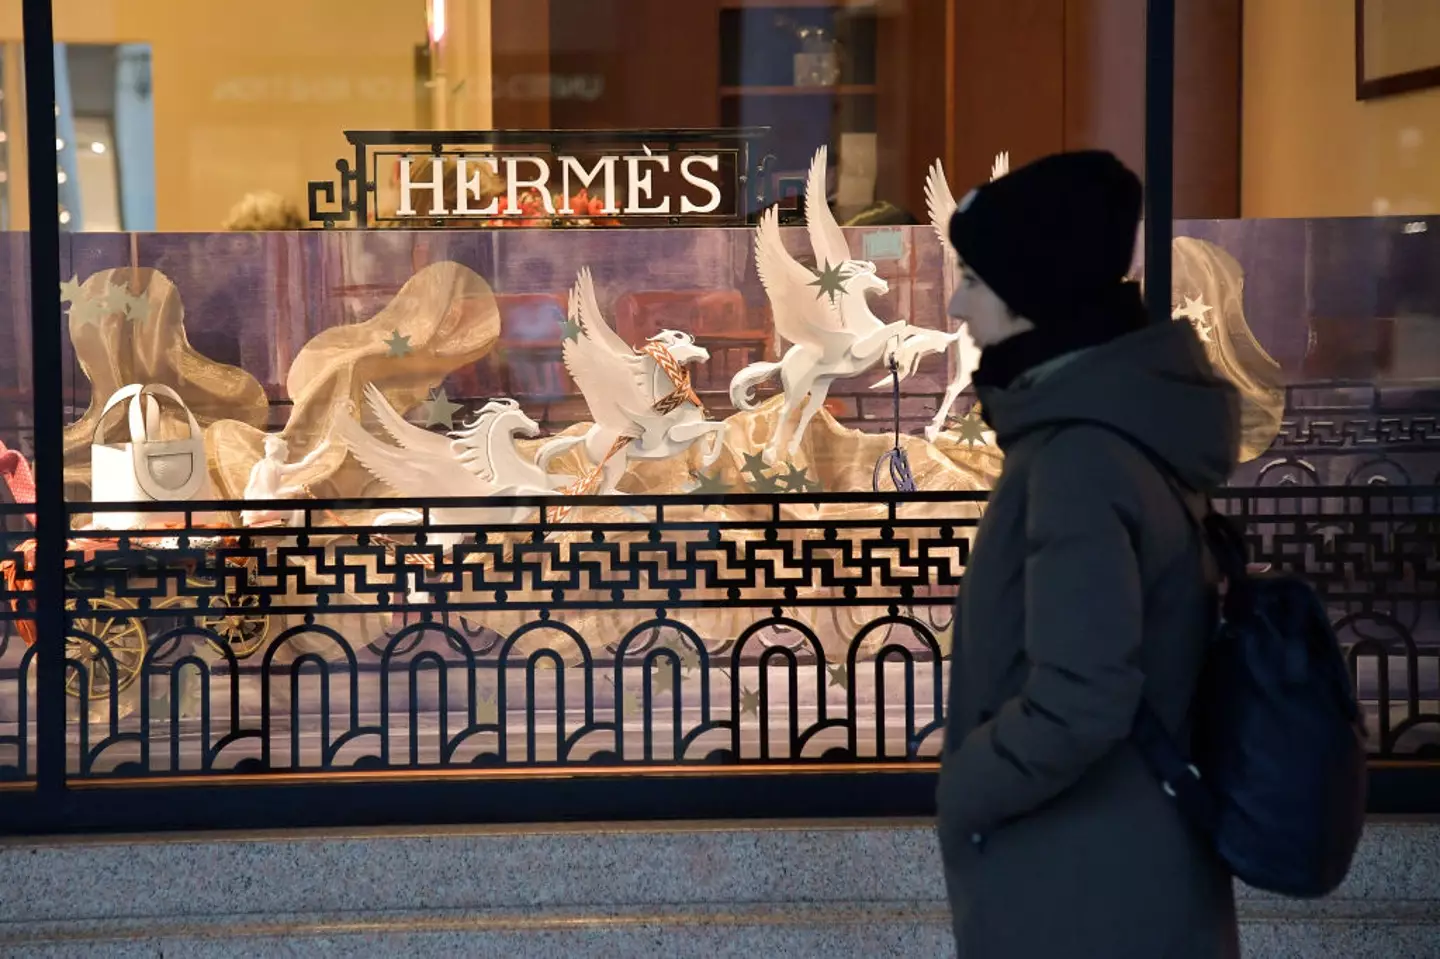 Hermès is reportedly worth $220 billion.